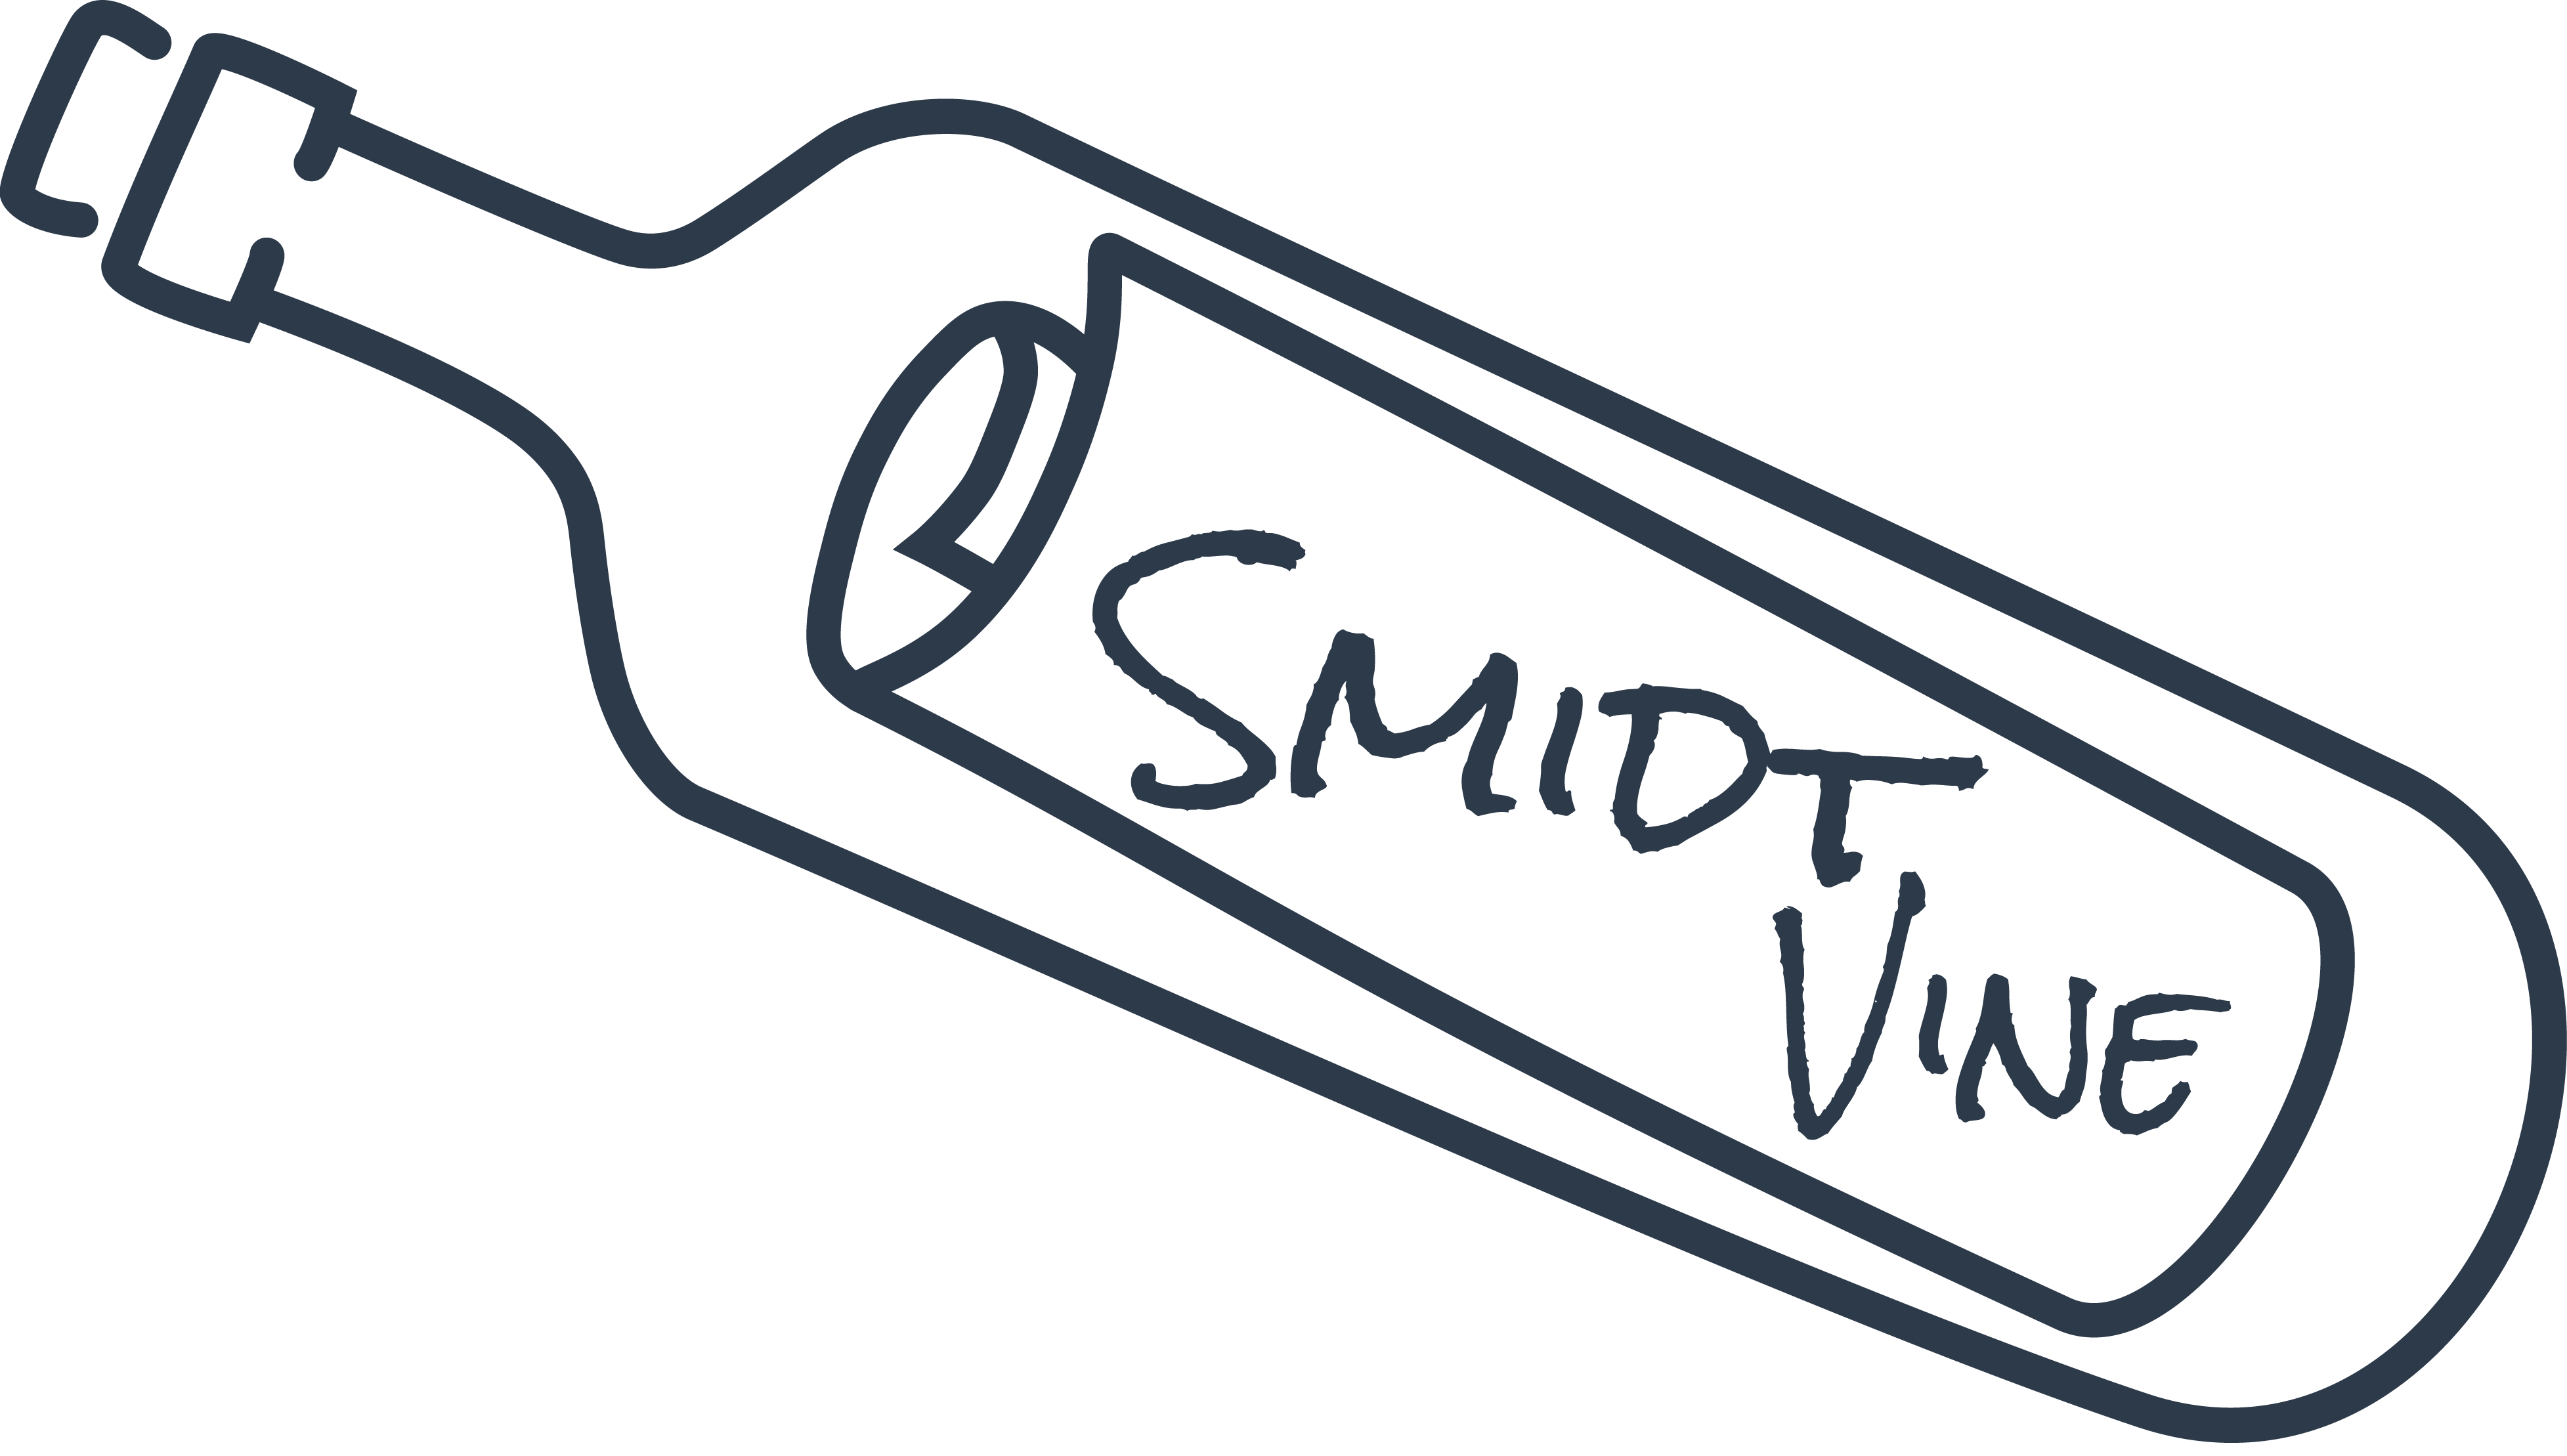 Smidt Vine logo